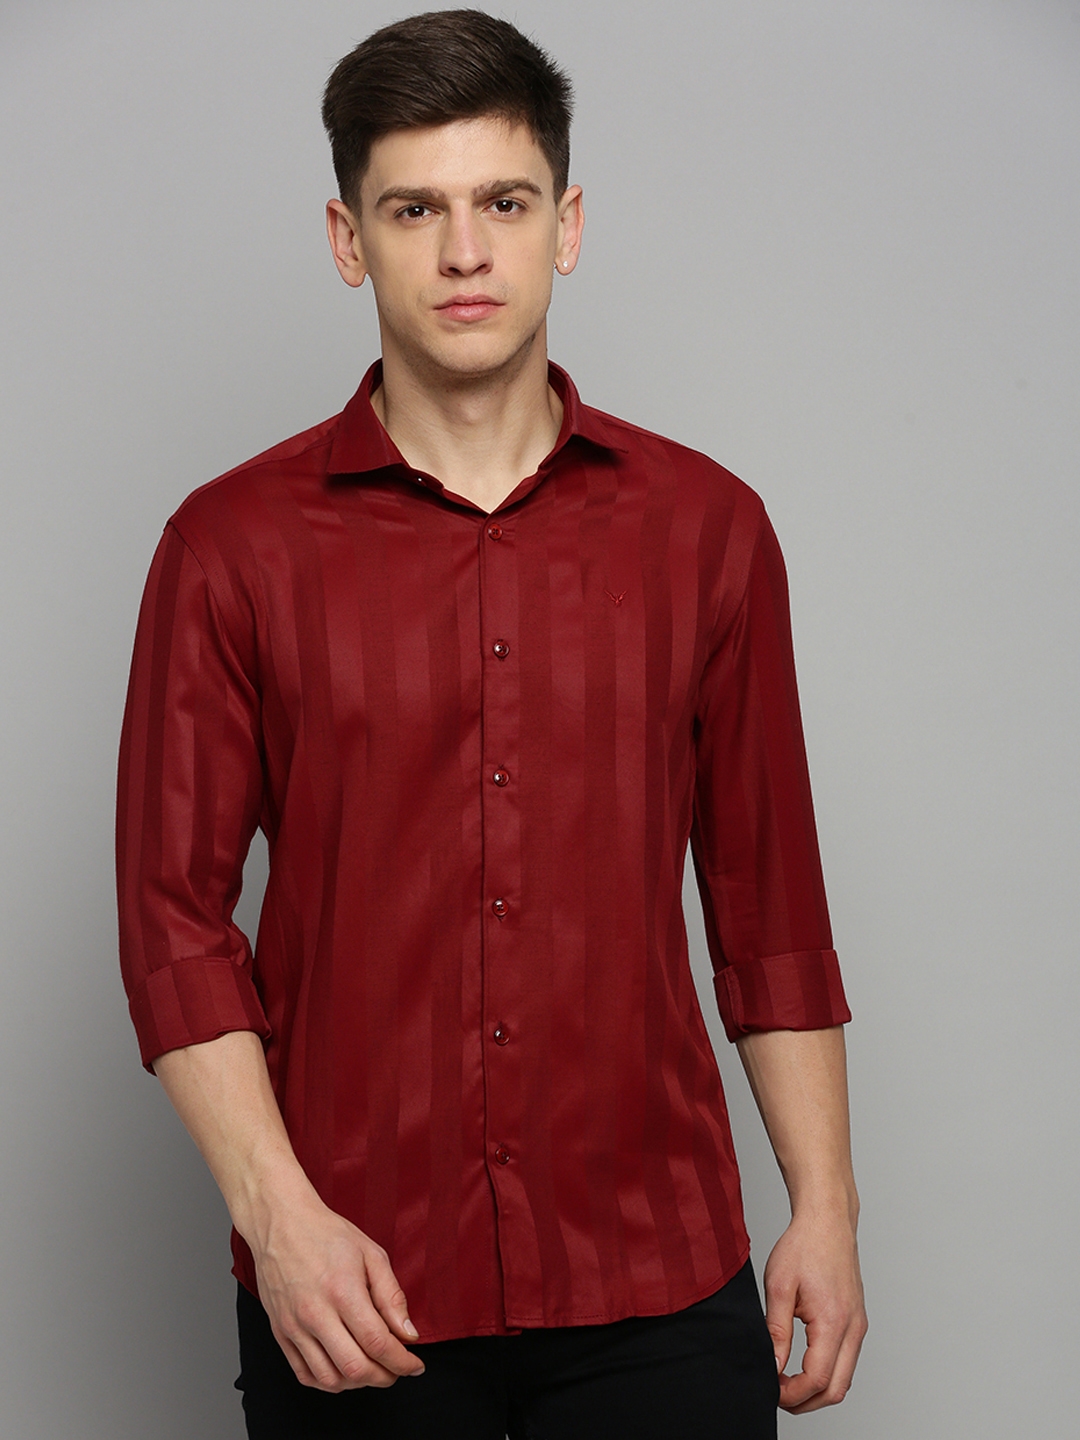 Showoff | SHOWOFF Men's Spread Collar Solid Maroon Classic Shirt 1